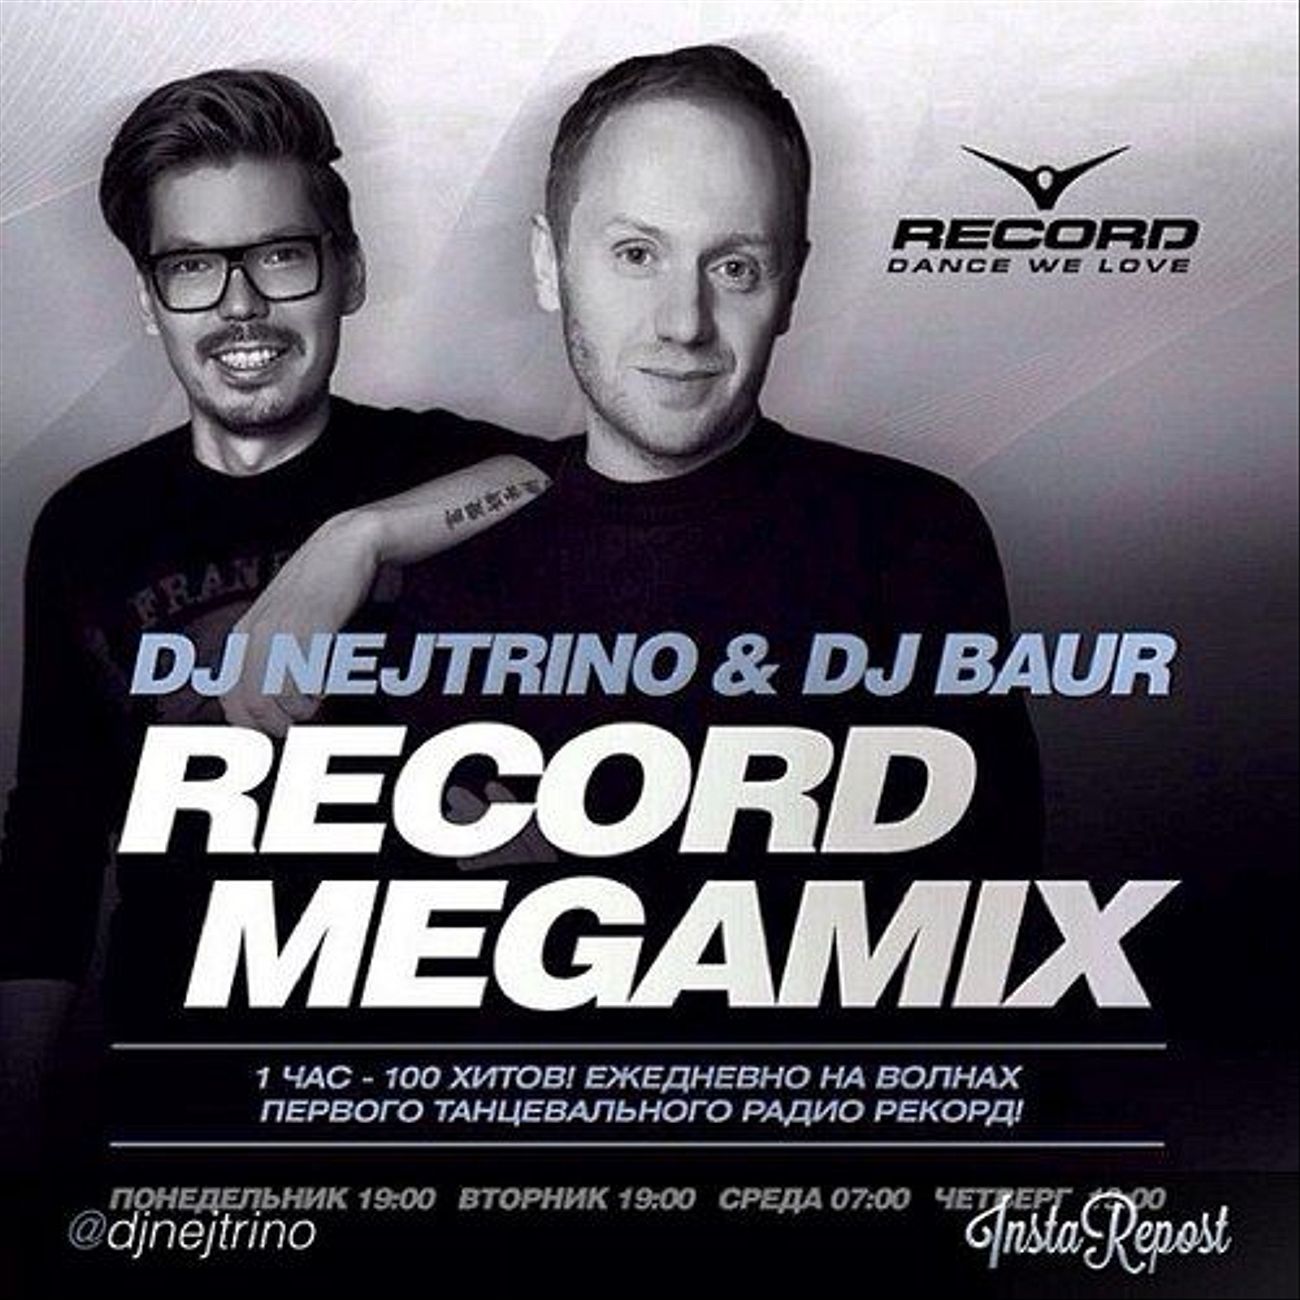 Record Megamix (DJ NEJTRINO & DJ BAUR)